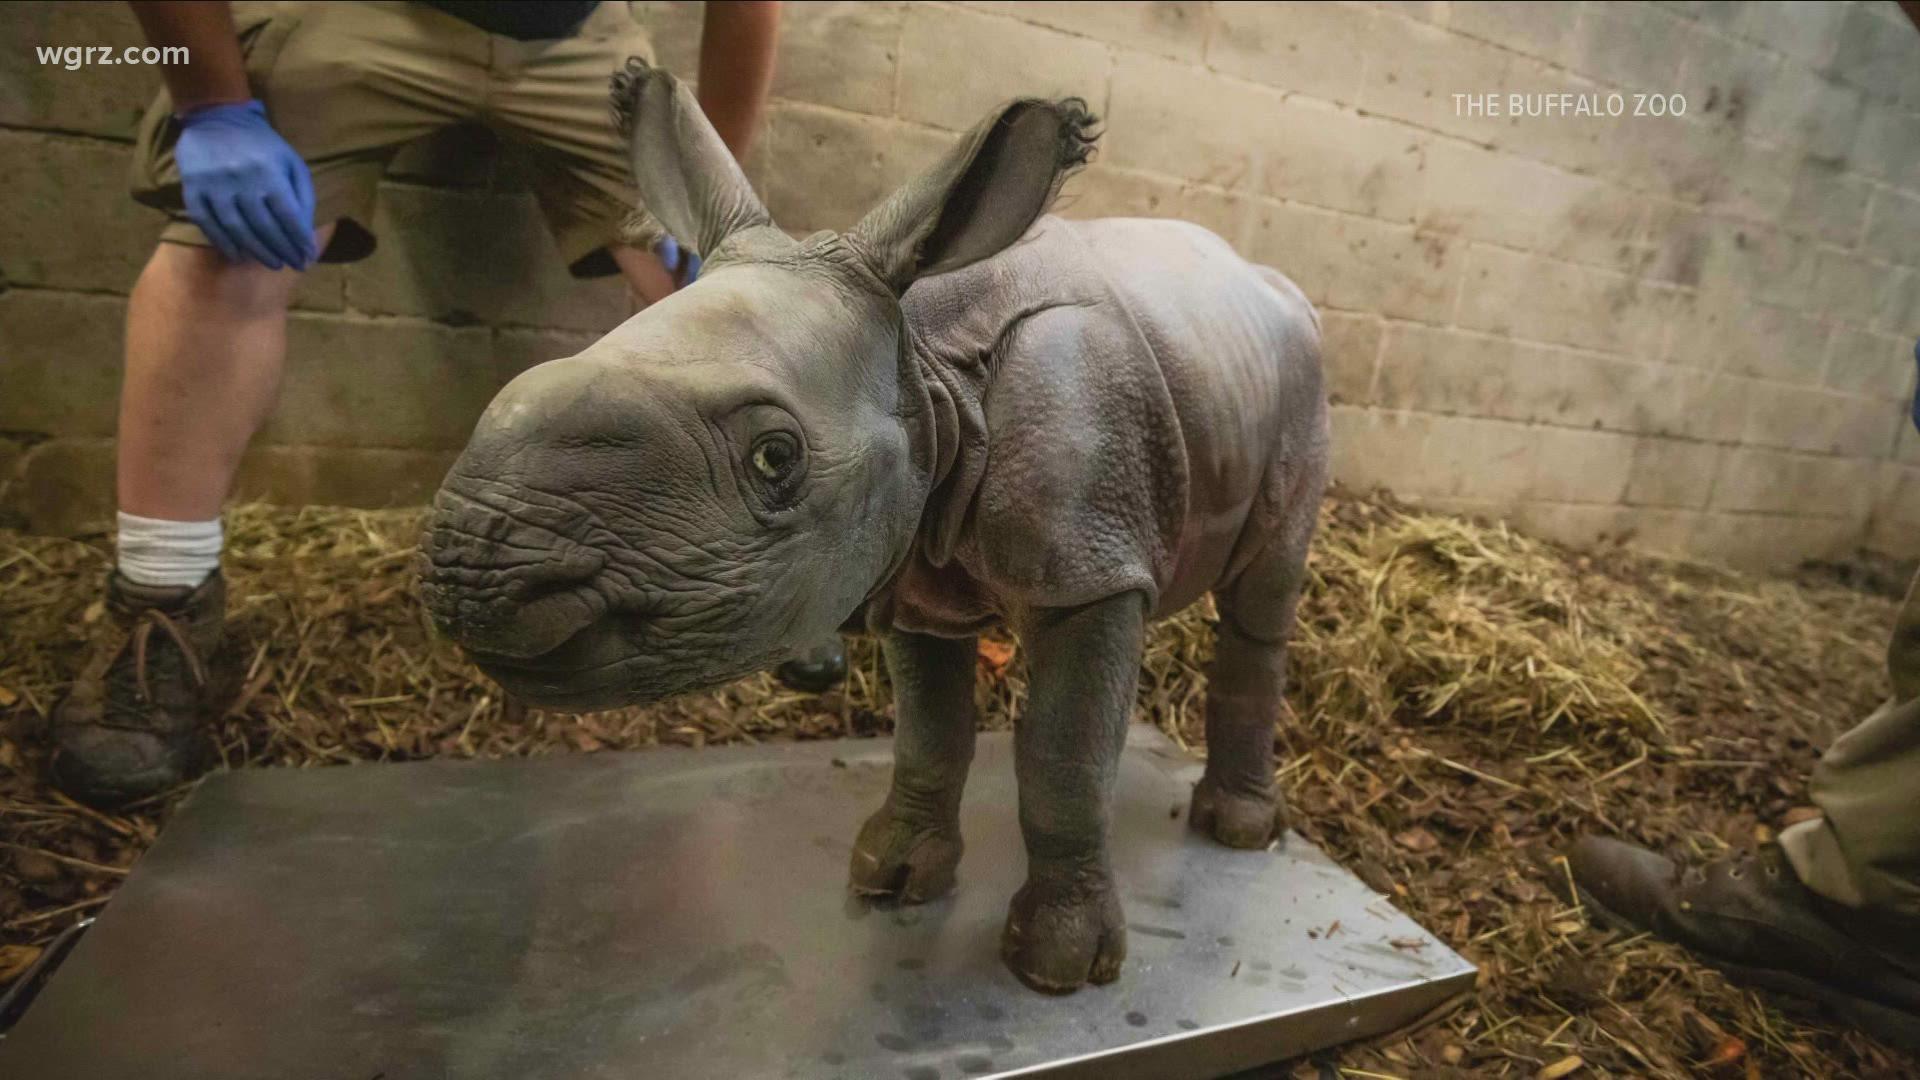 Buffalo Zoo welcomes female baby rhino